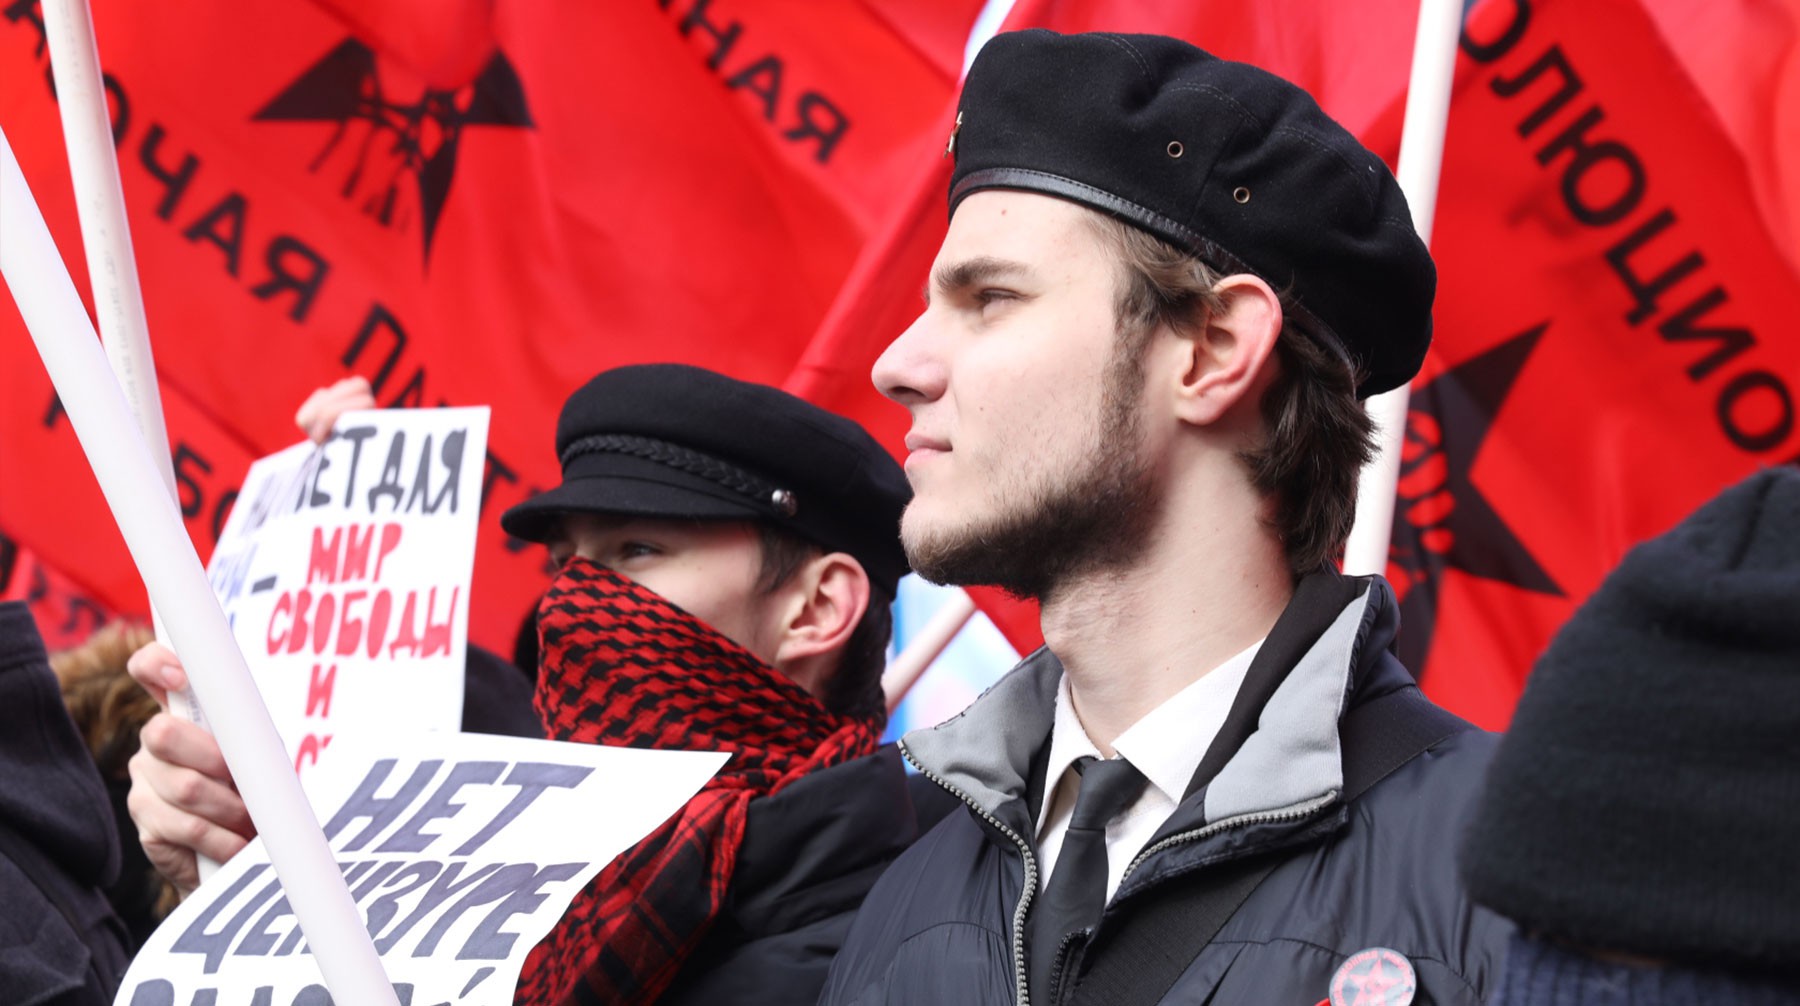 Dailystorm - Митинг «Против изоляции рунета»